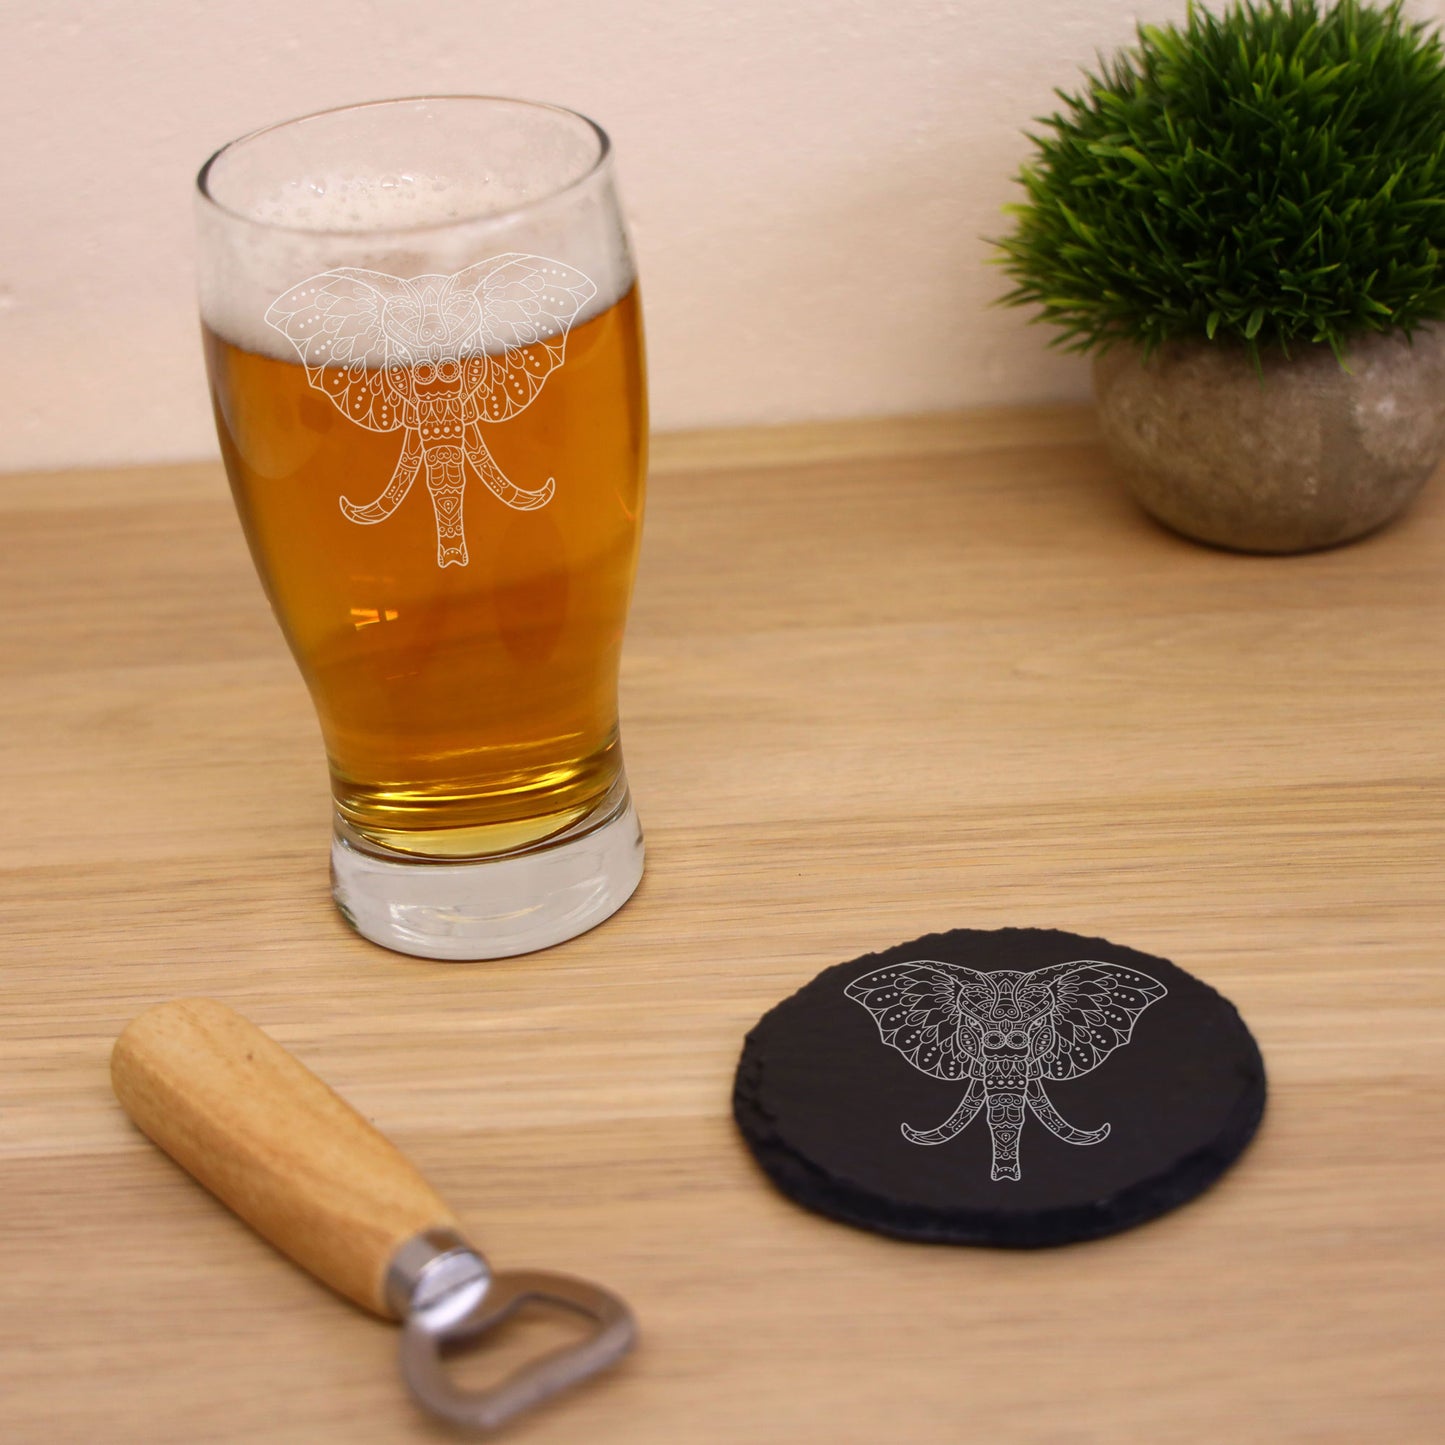 Elephant Mandala Engraved Beer Glass and/or Coaster Set  - Always Looking Good - Glass & Round Coaster Set  